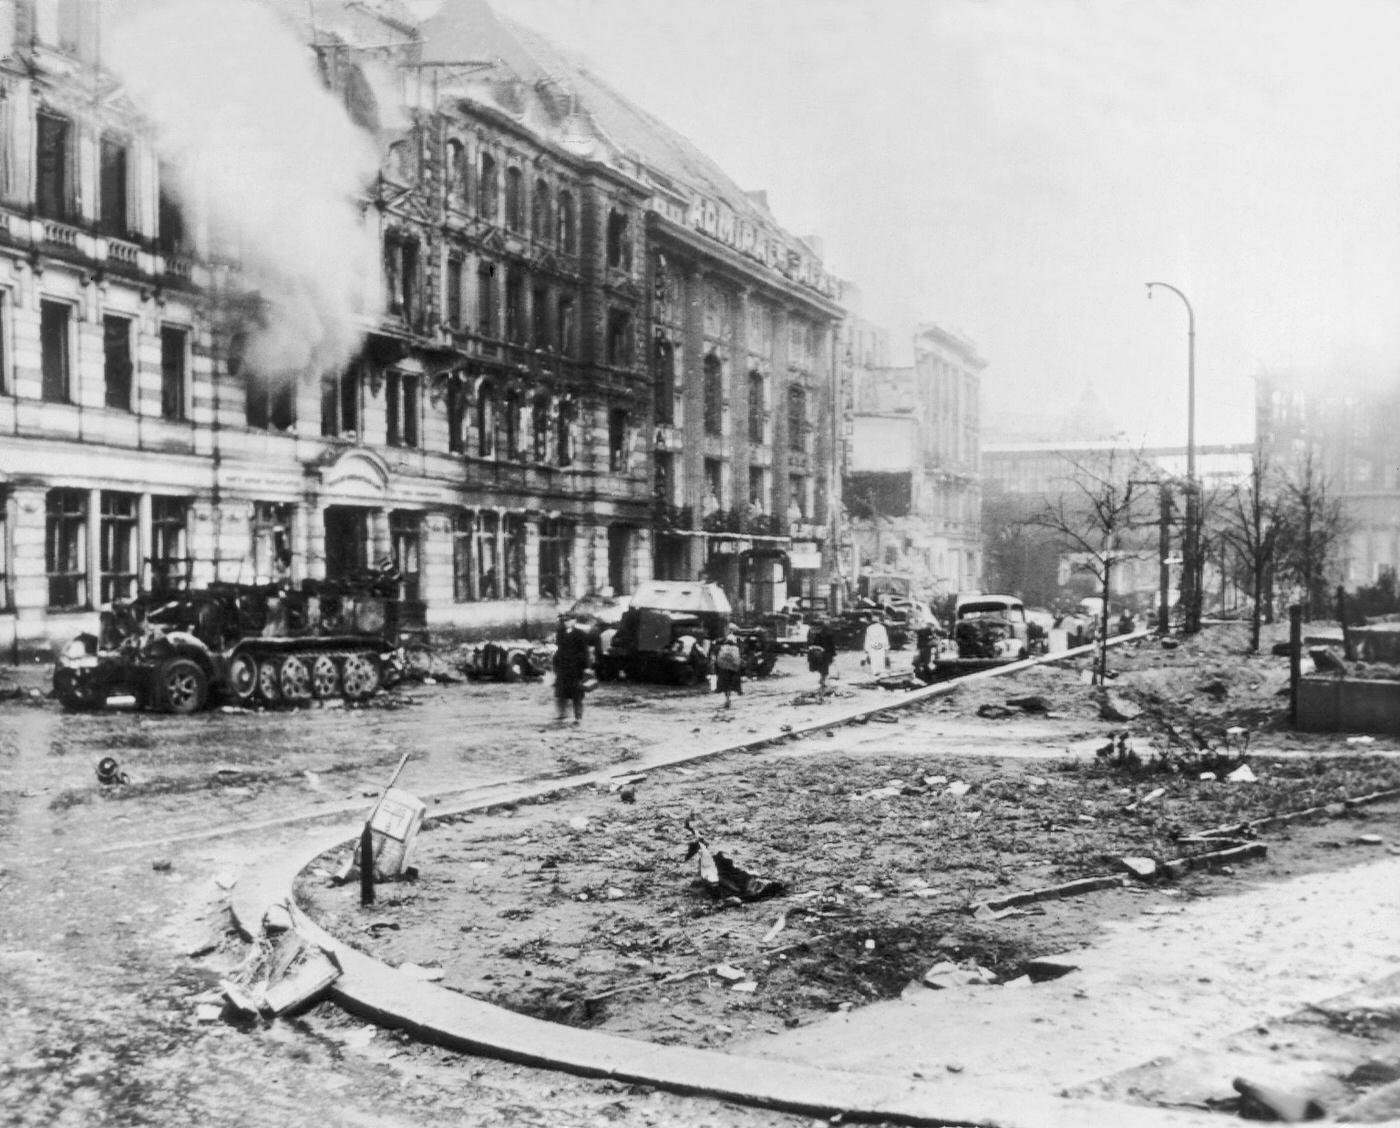 Berlin after the Allied bombings in 1945.